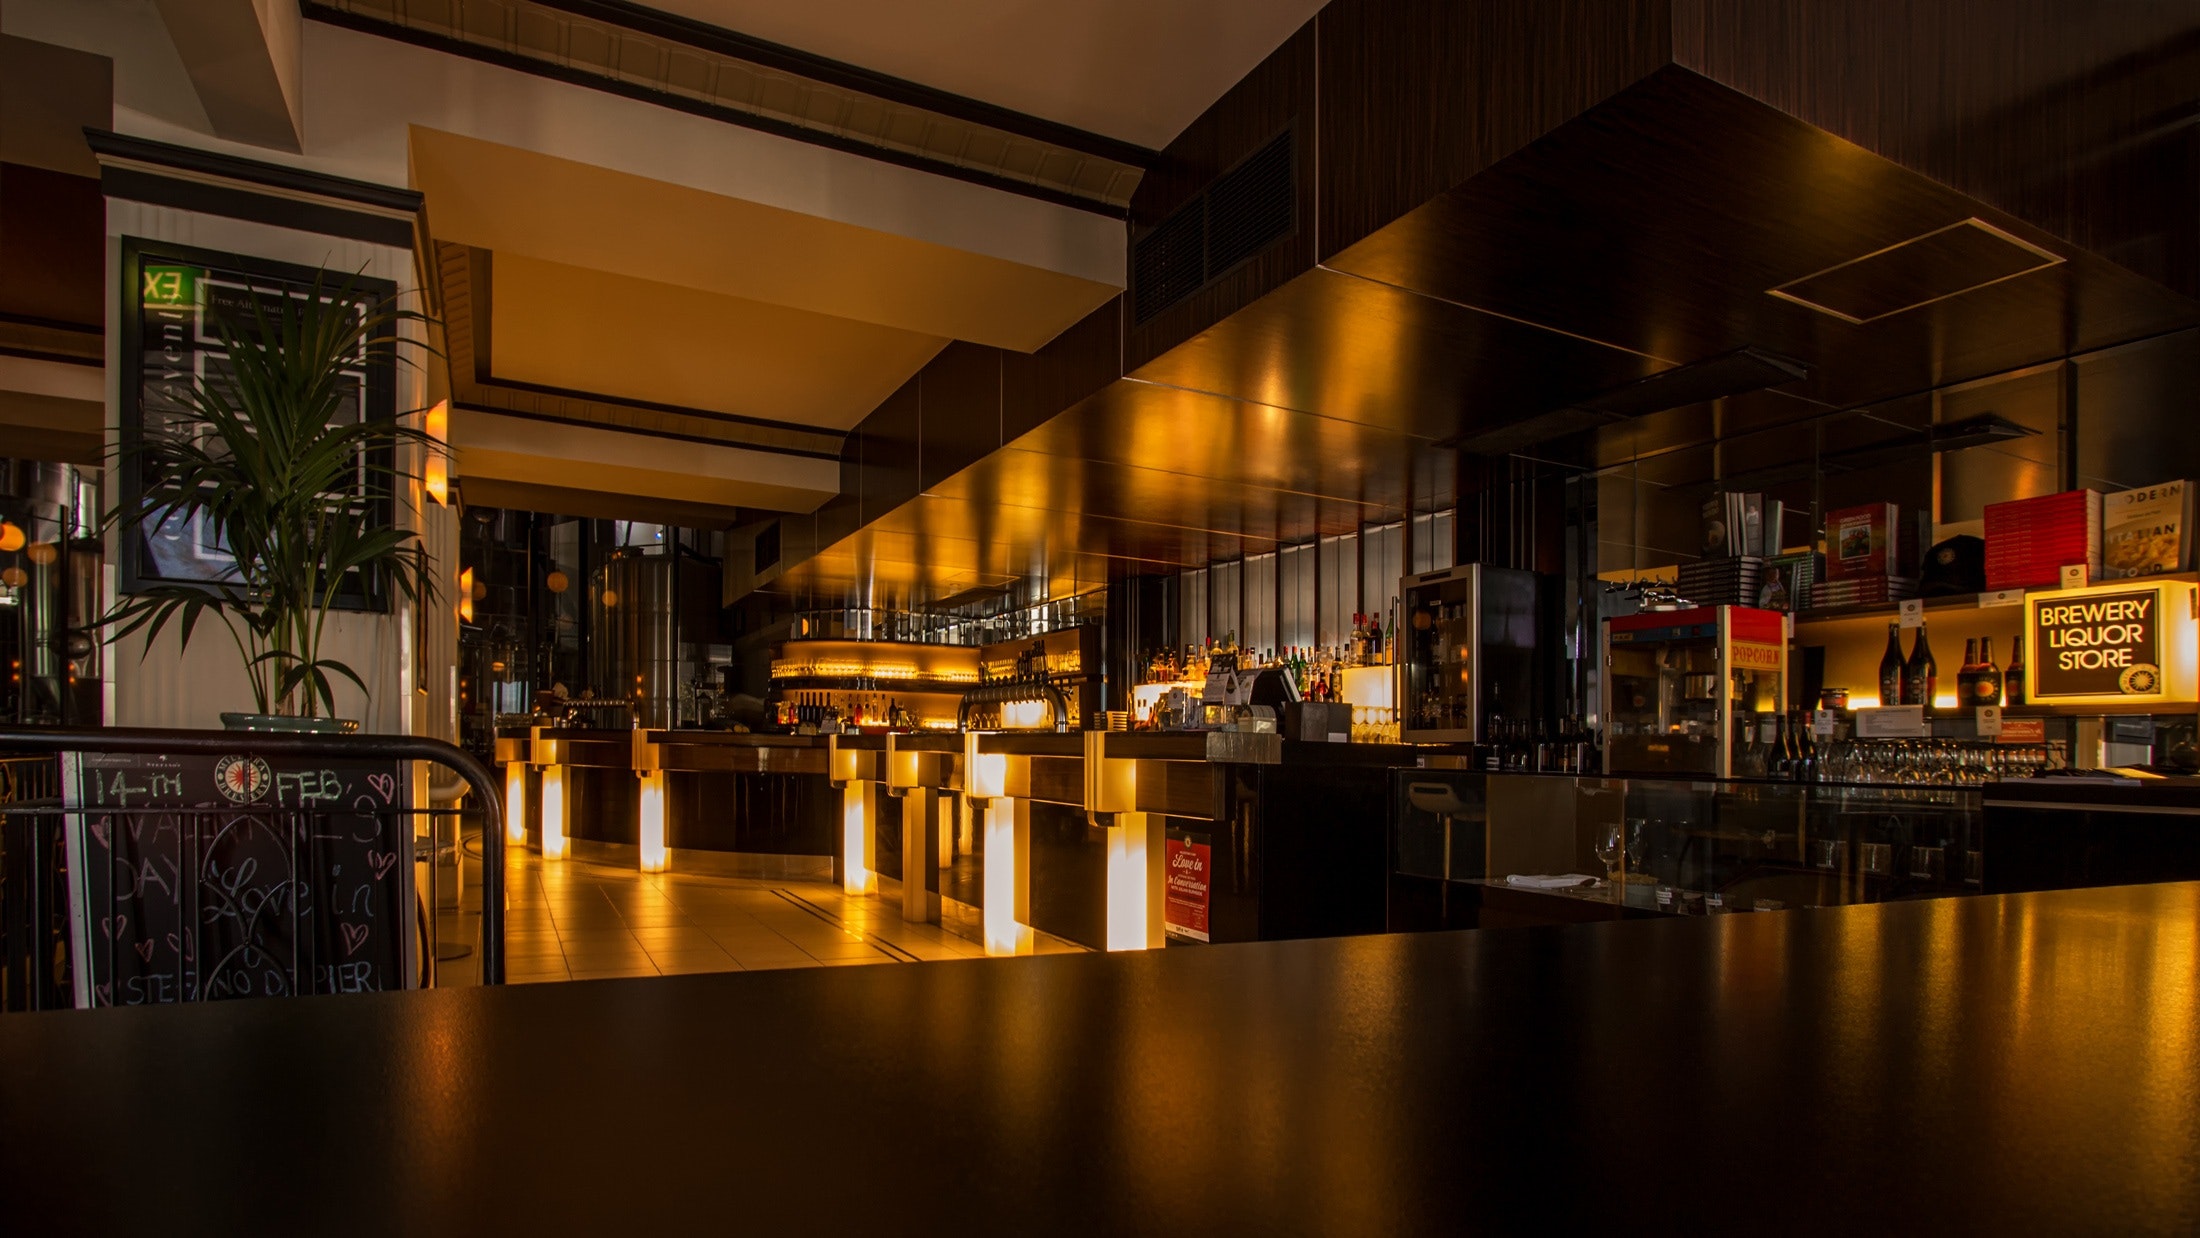 Dark Hotel Restaurant Playing with Lighting and Interior Design